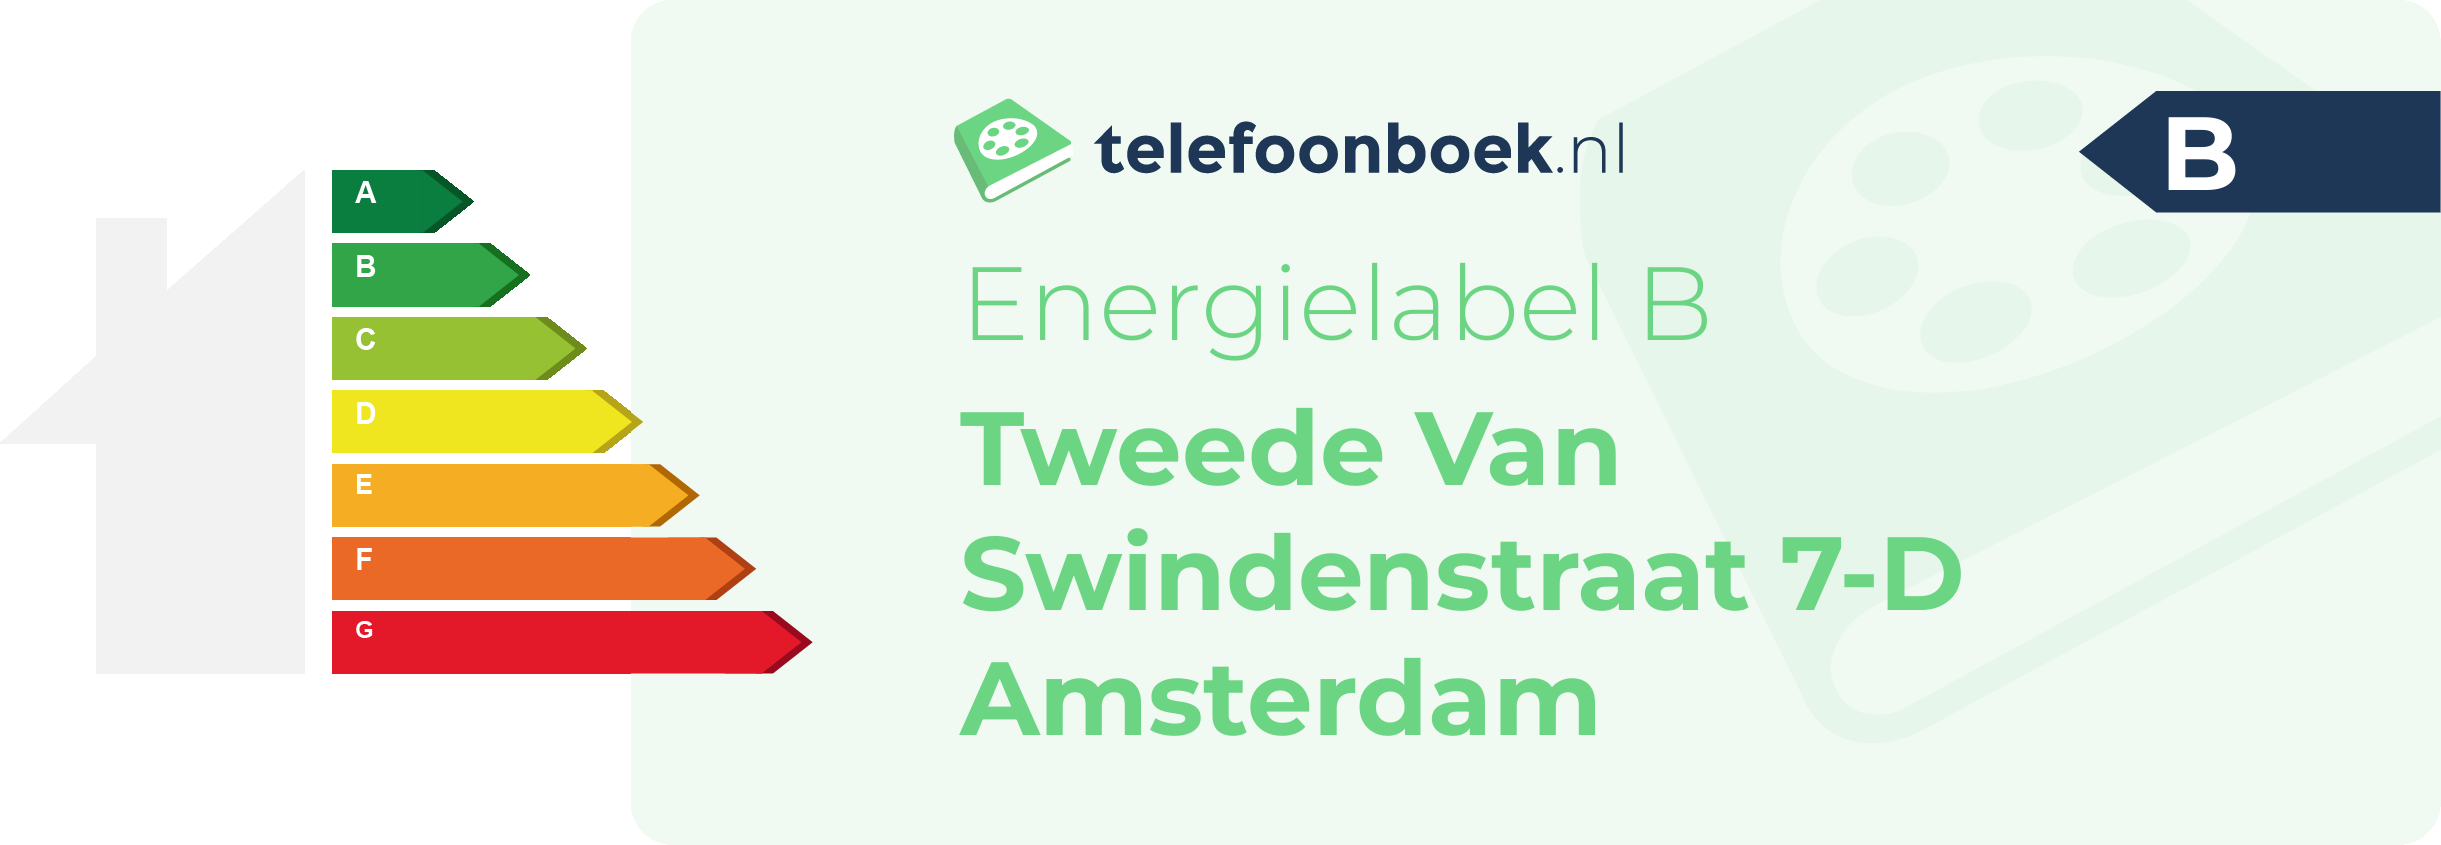 Energielabel Tweede Van Swindenstraat 7-D Amsterdam